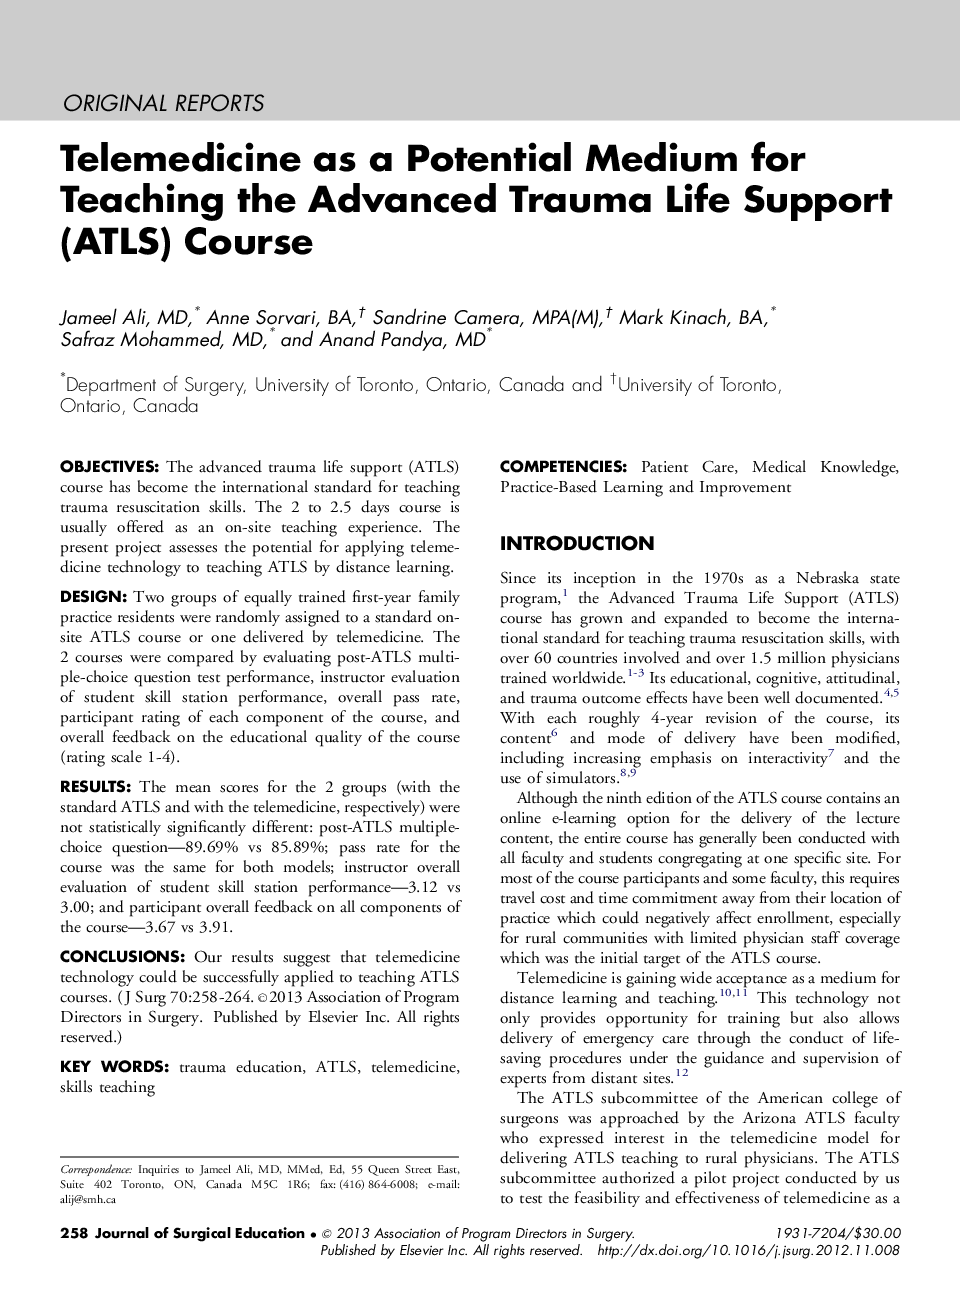 Telemedicine as a Potential Medium for Teaching the Advanced Trauma Life Support (ATLS) Course